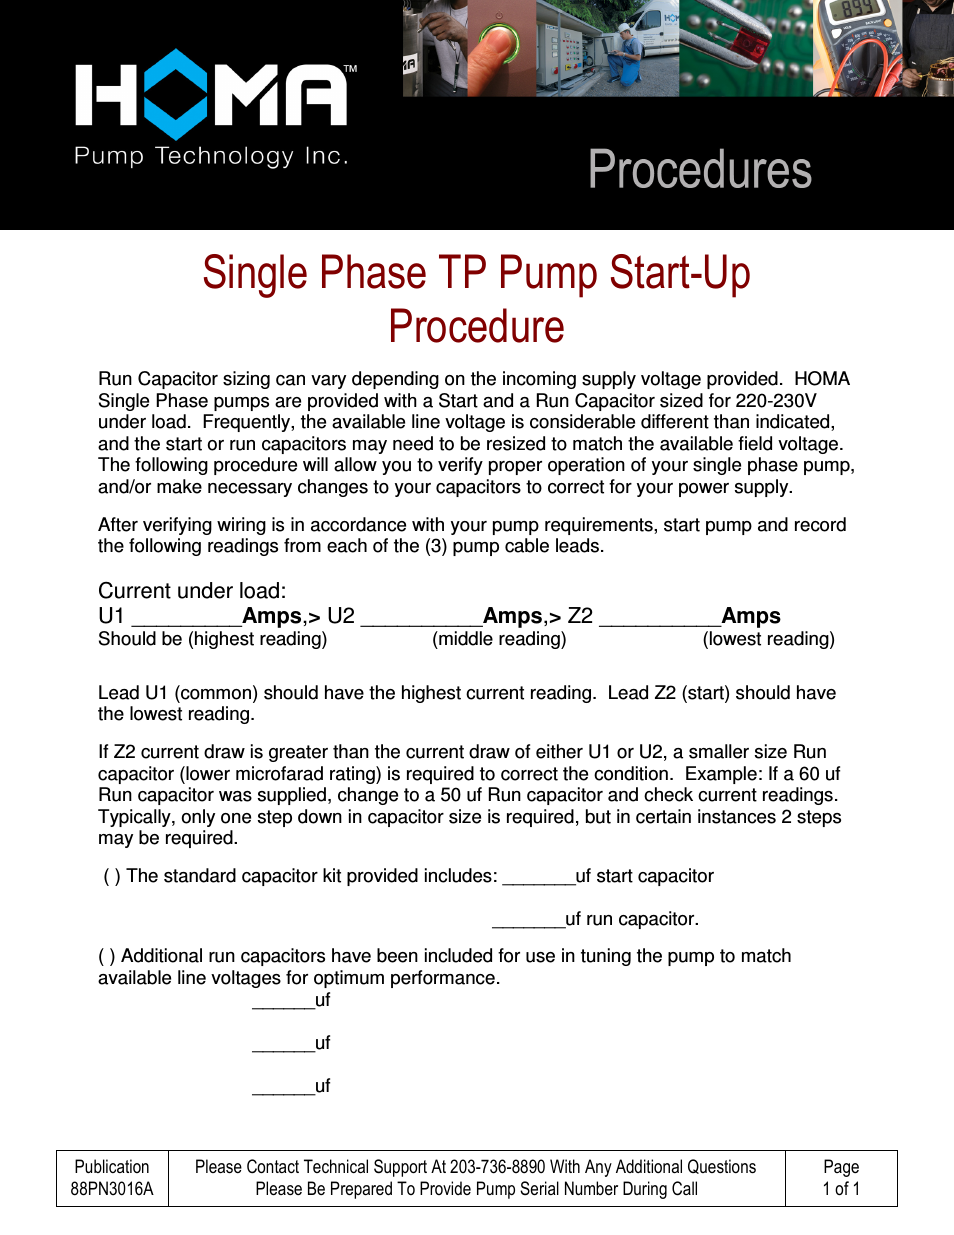 Single Phase TP Pump Start Up Procedure